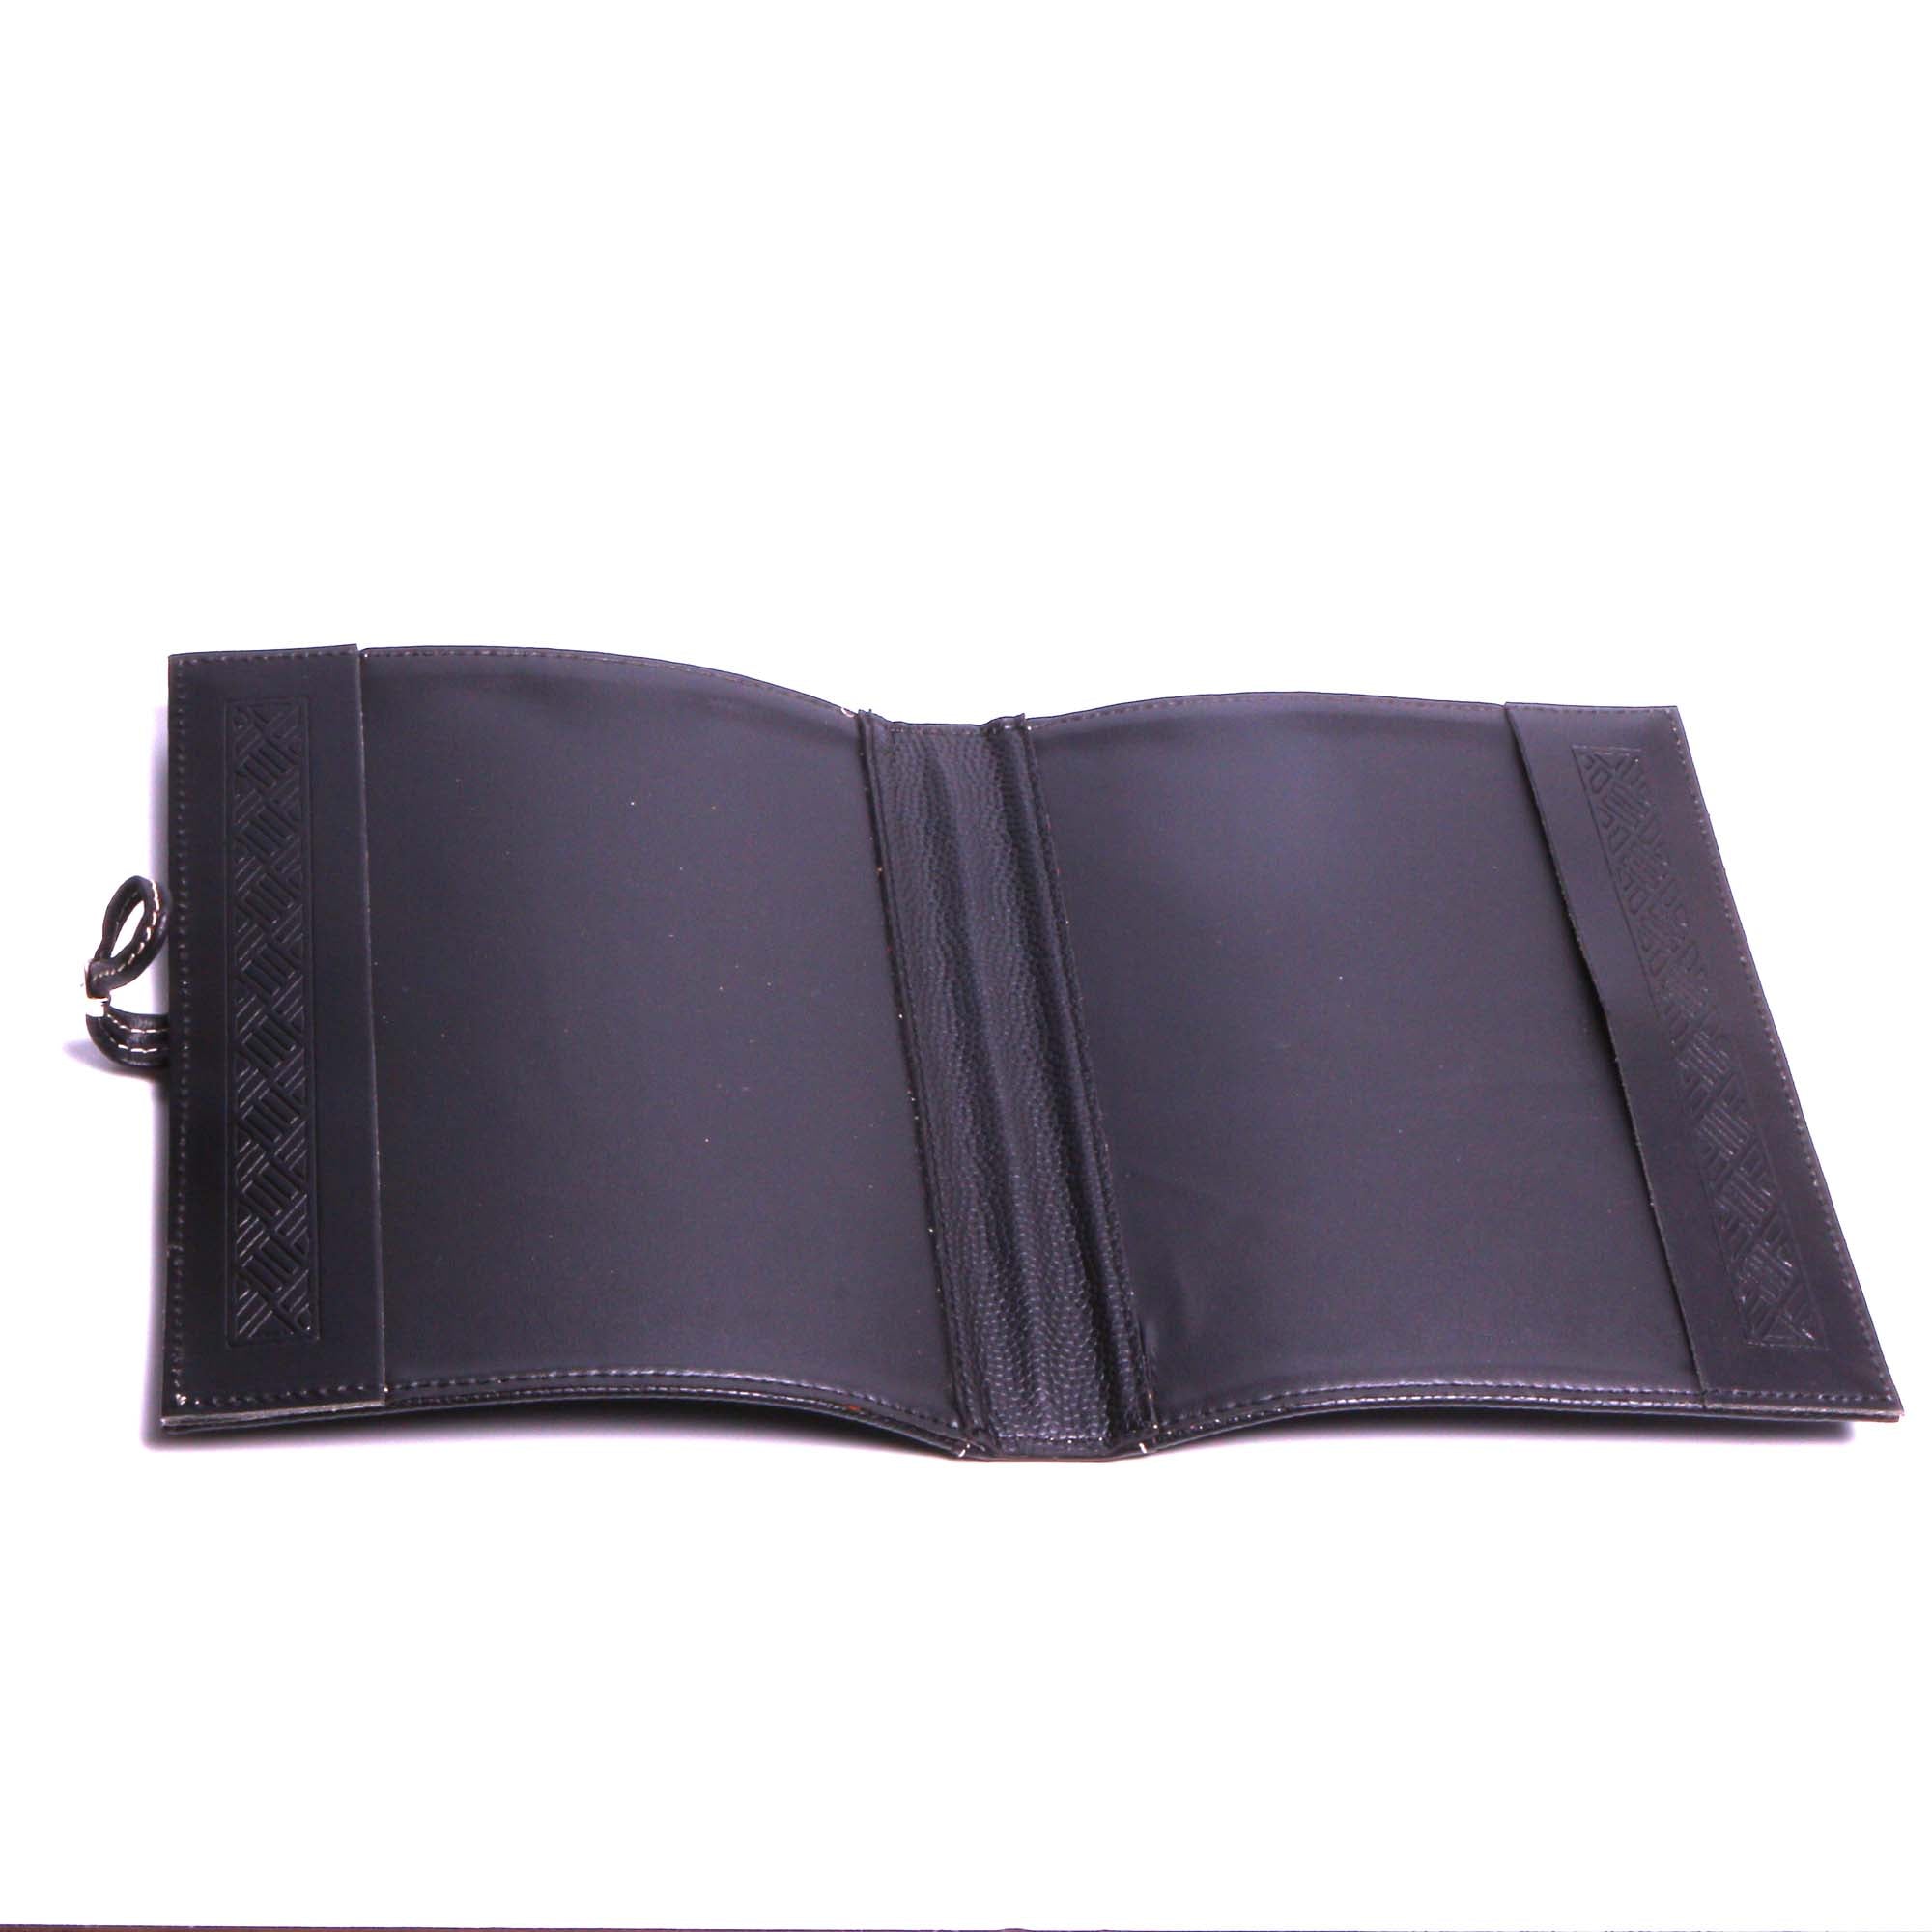 Protège cahier en cuir noir - Accessoire cuir italien